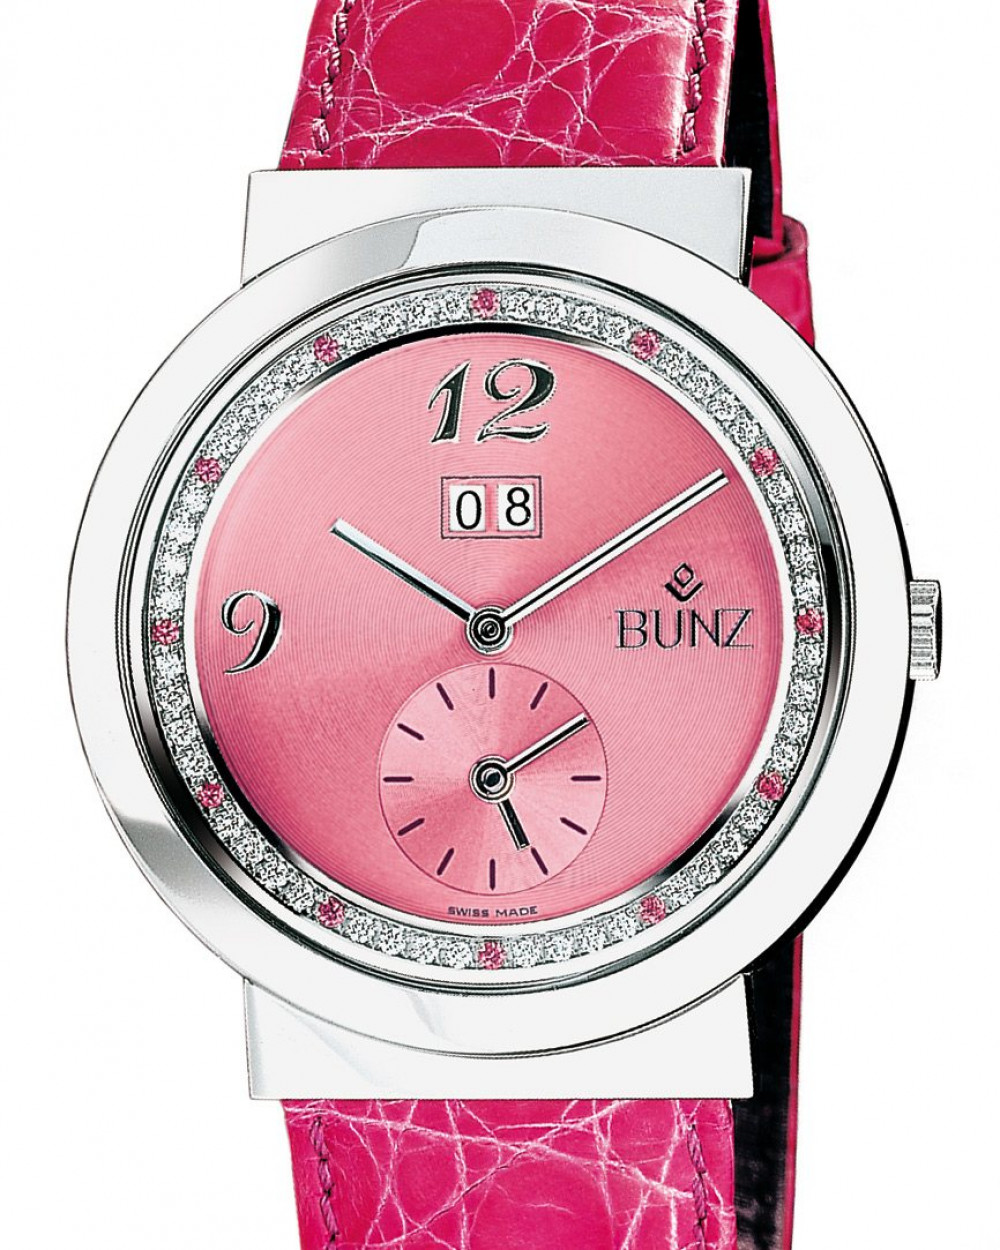 Zegarek firmy Bunz, model Ergo